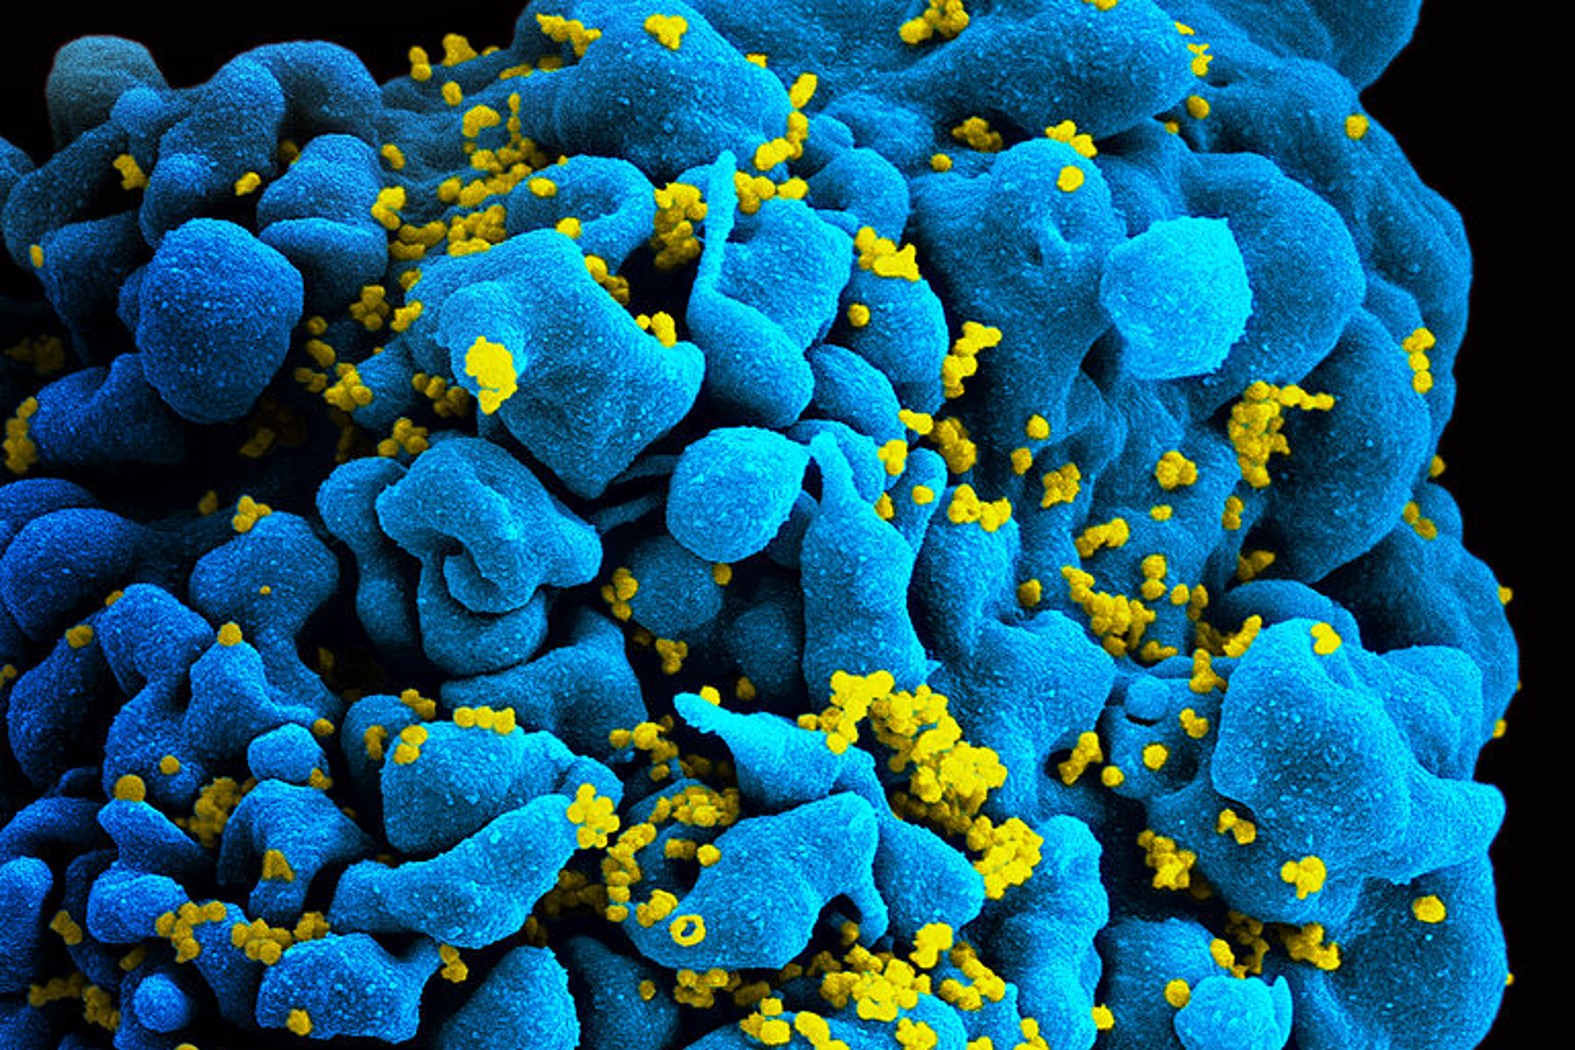 Can cytokines remove HIV's cloak?